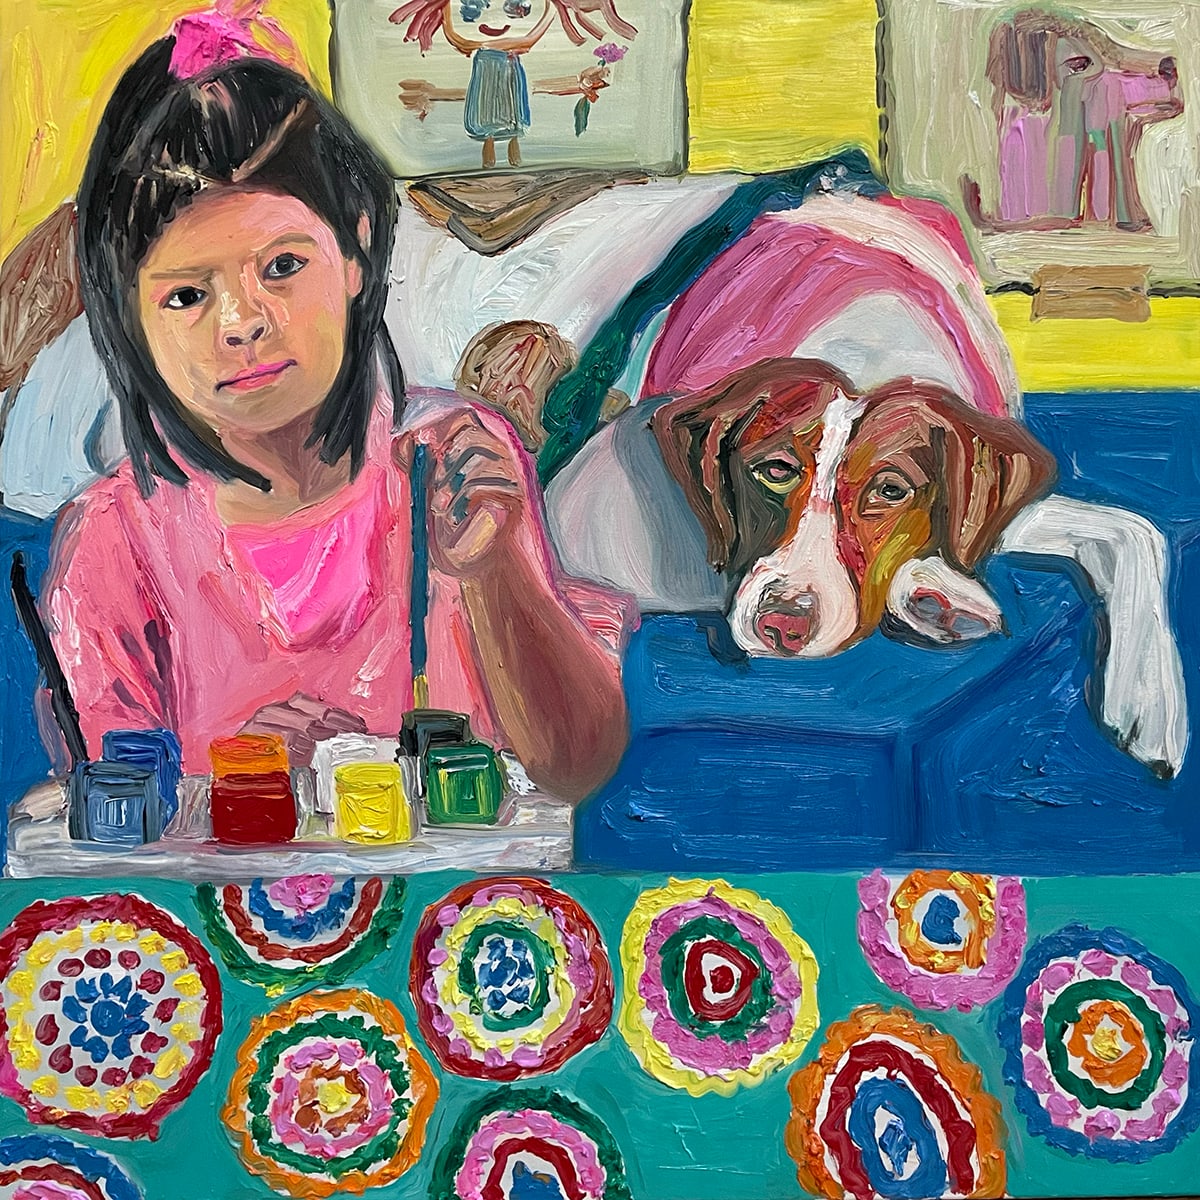 Girl with Dog by jessica alazraki  Image: Girl with Dog